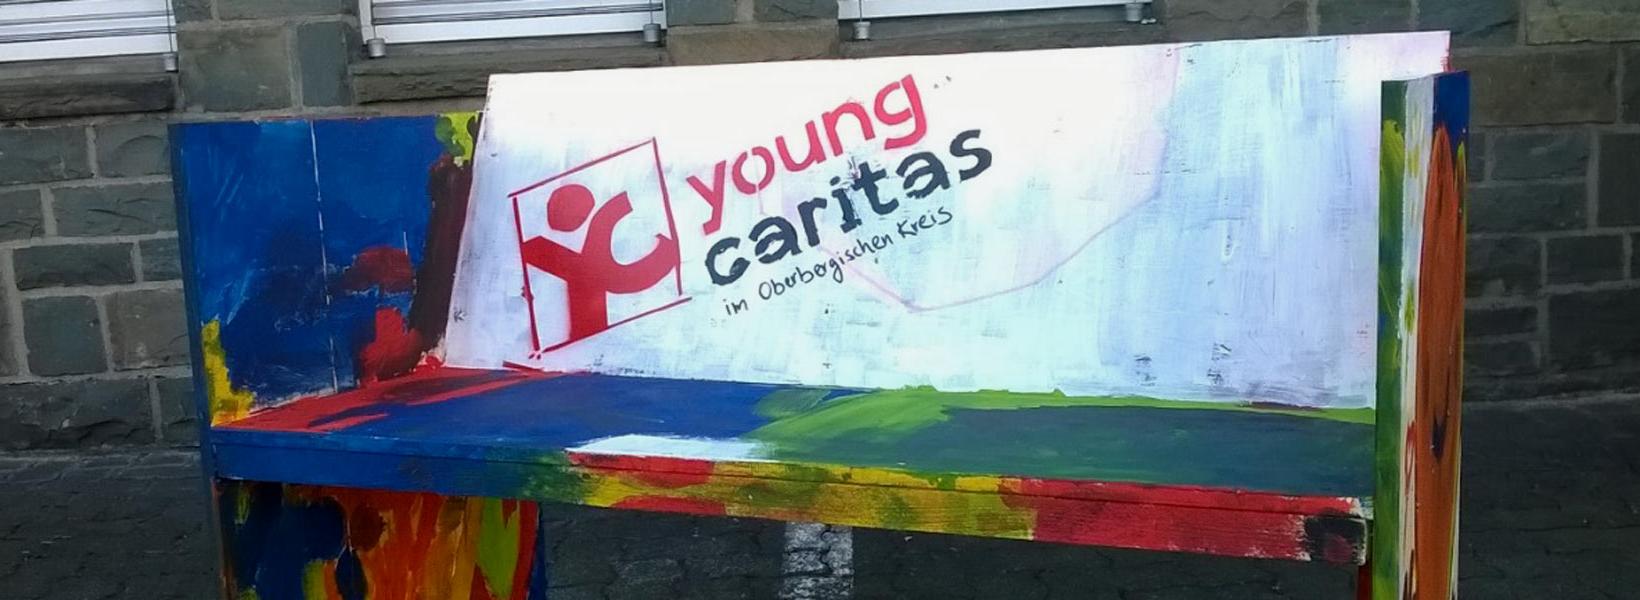 youngcaritas